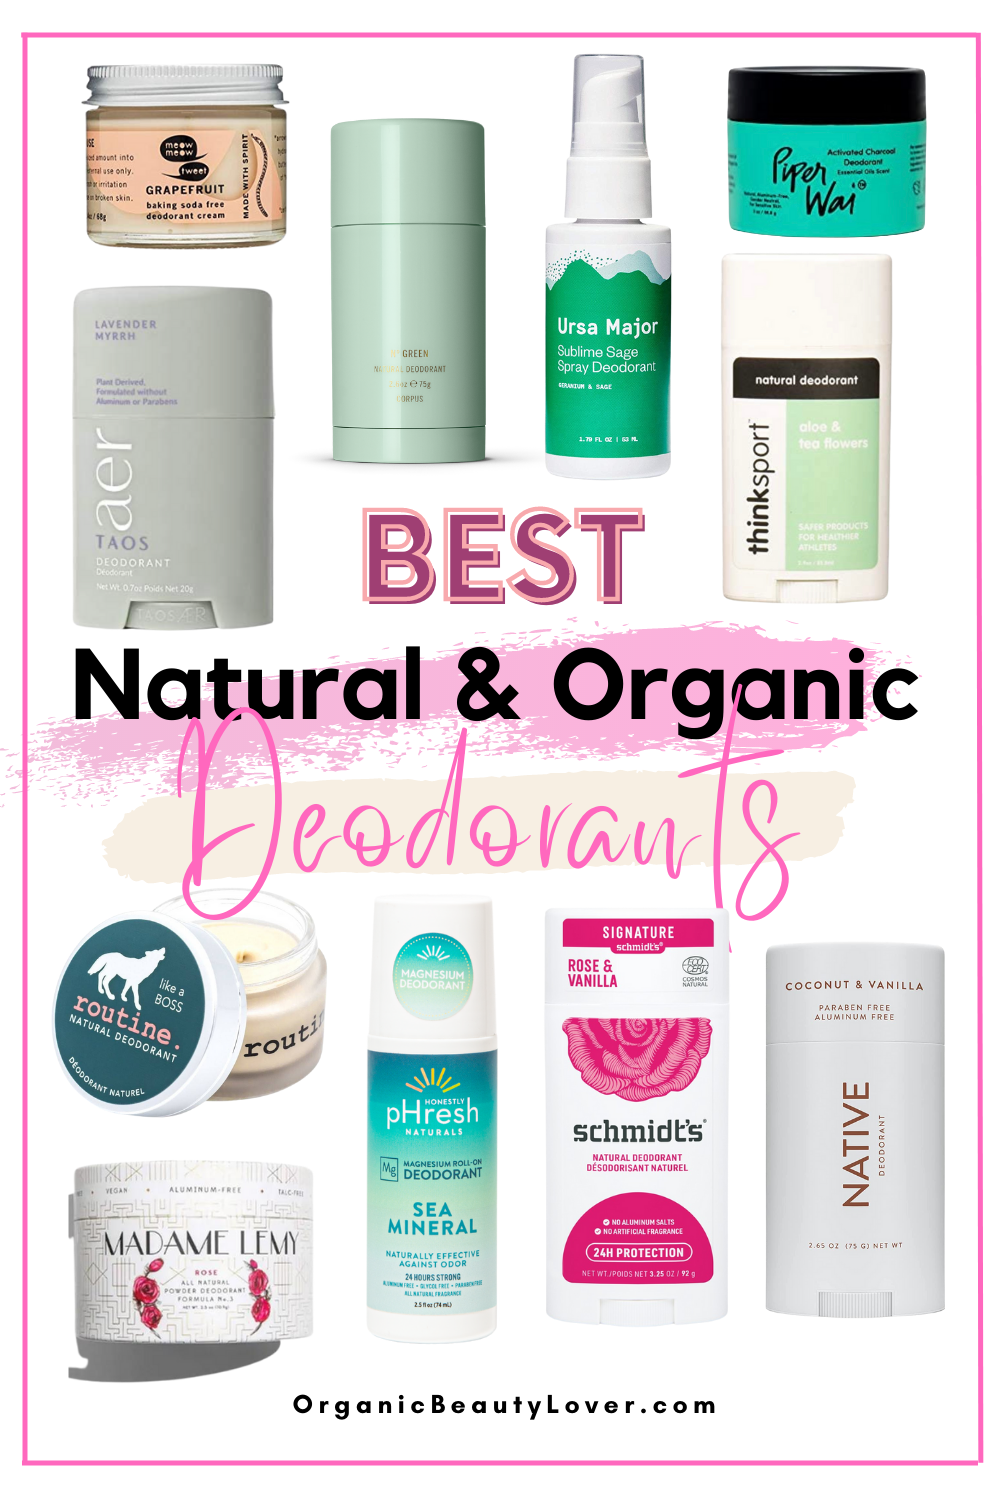 Best natural deodorants